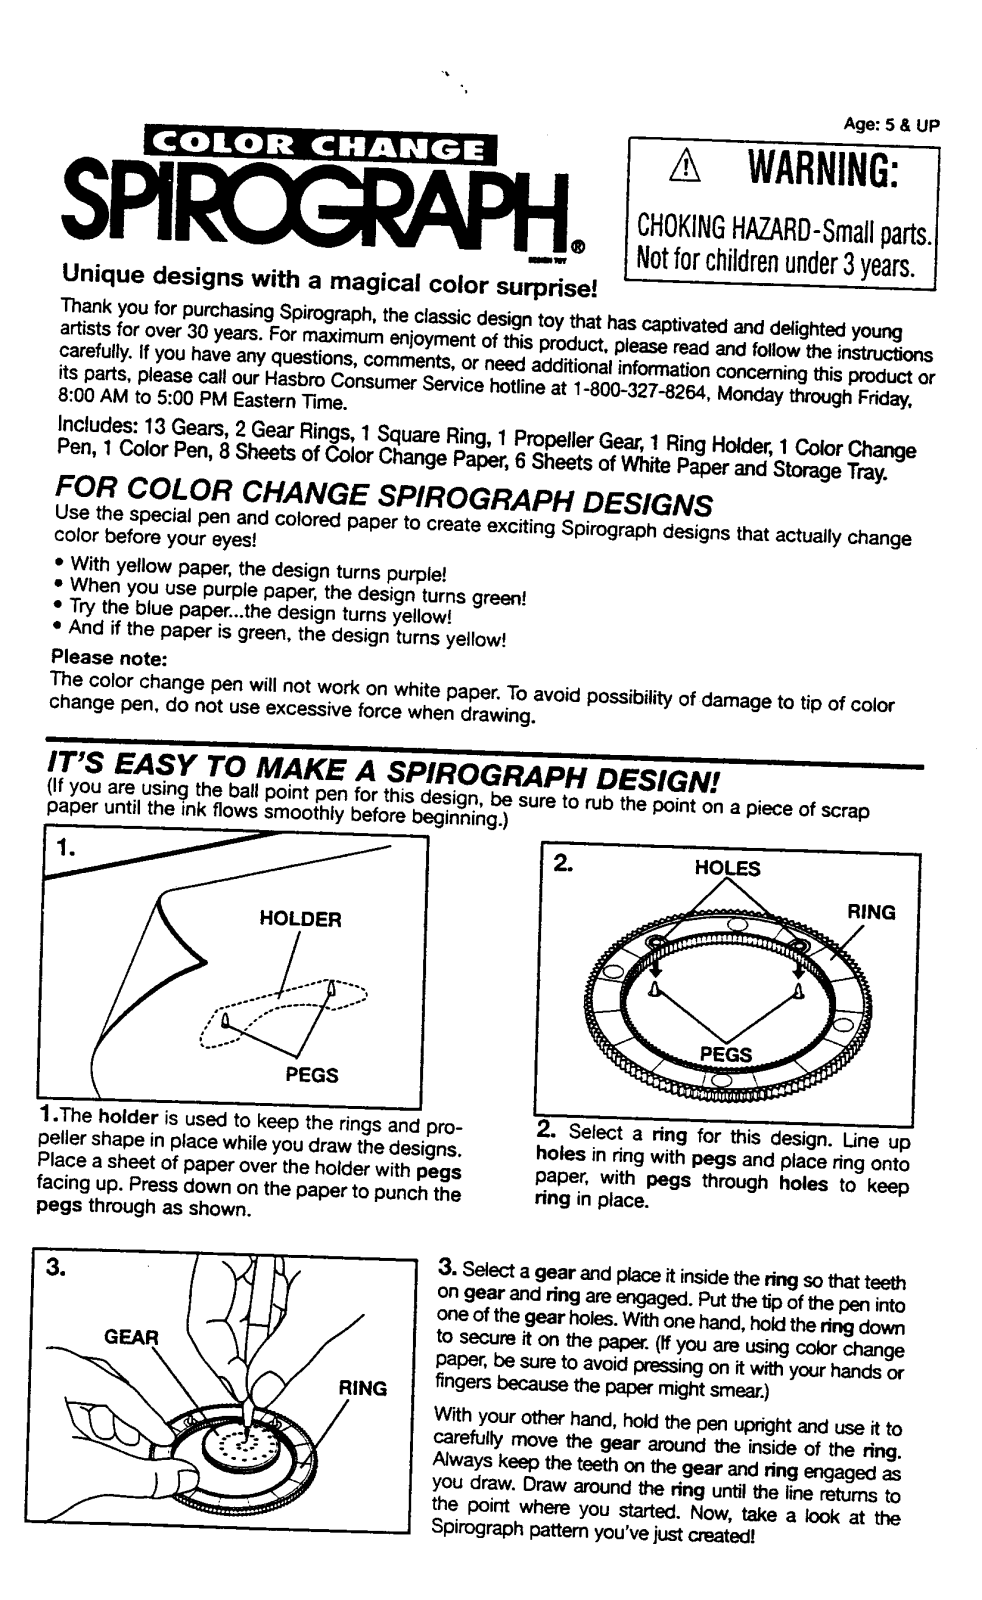 Hasbro SPIROGRAPH COLOR CHANGE Manual